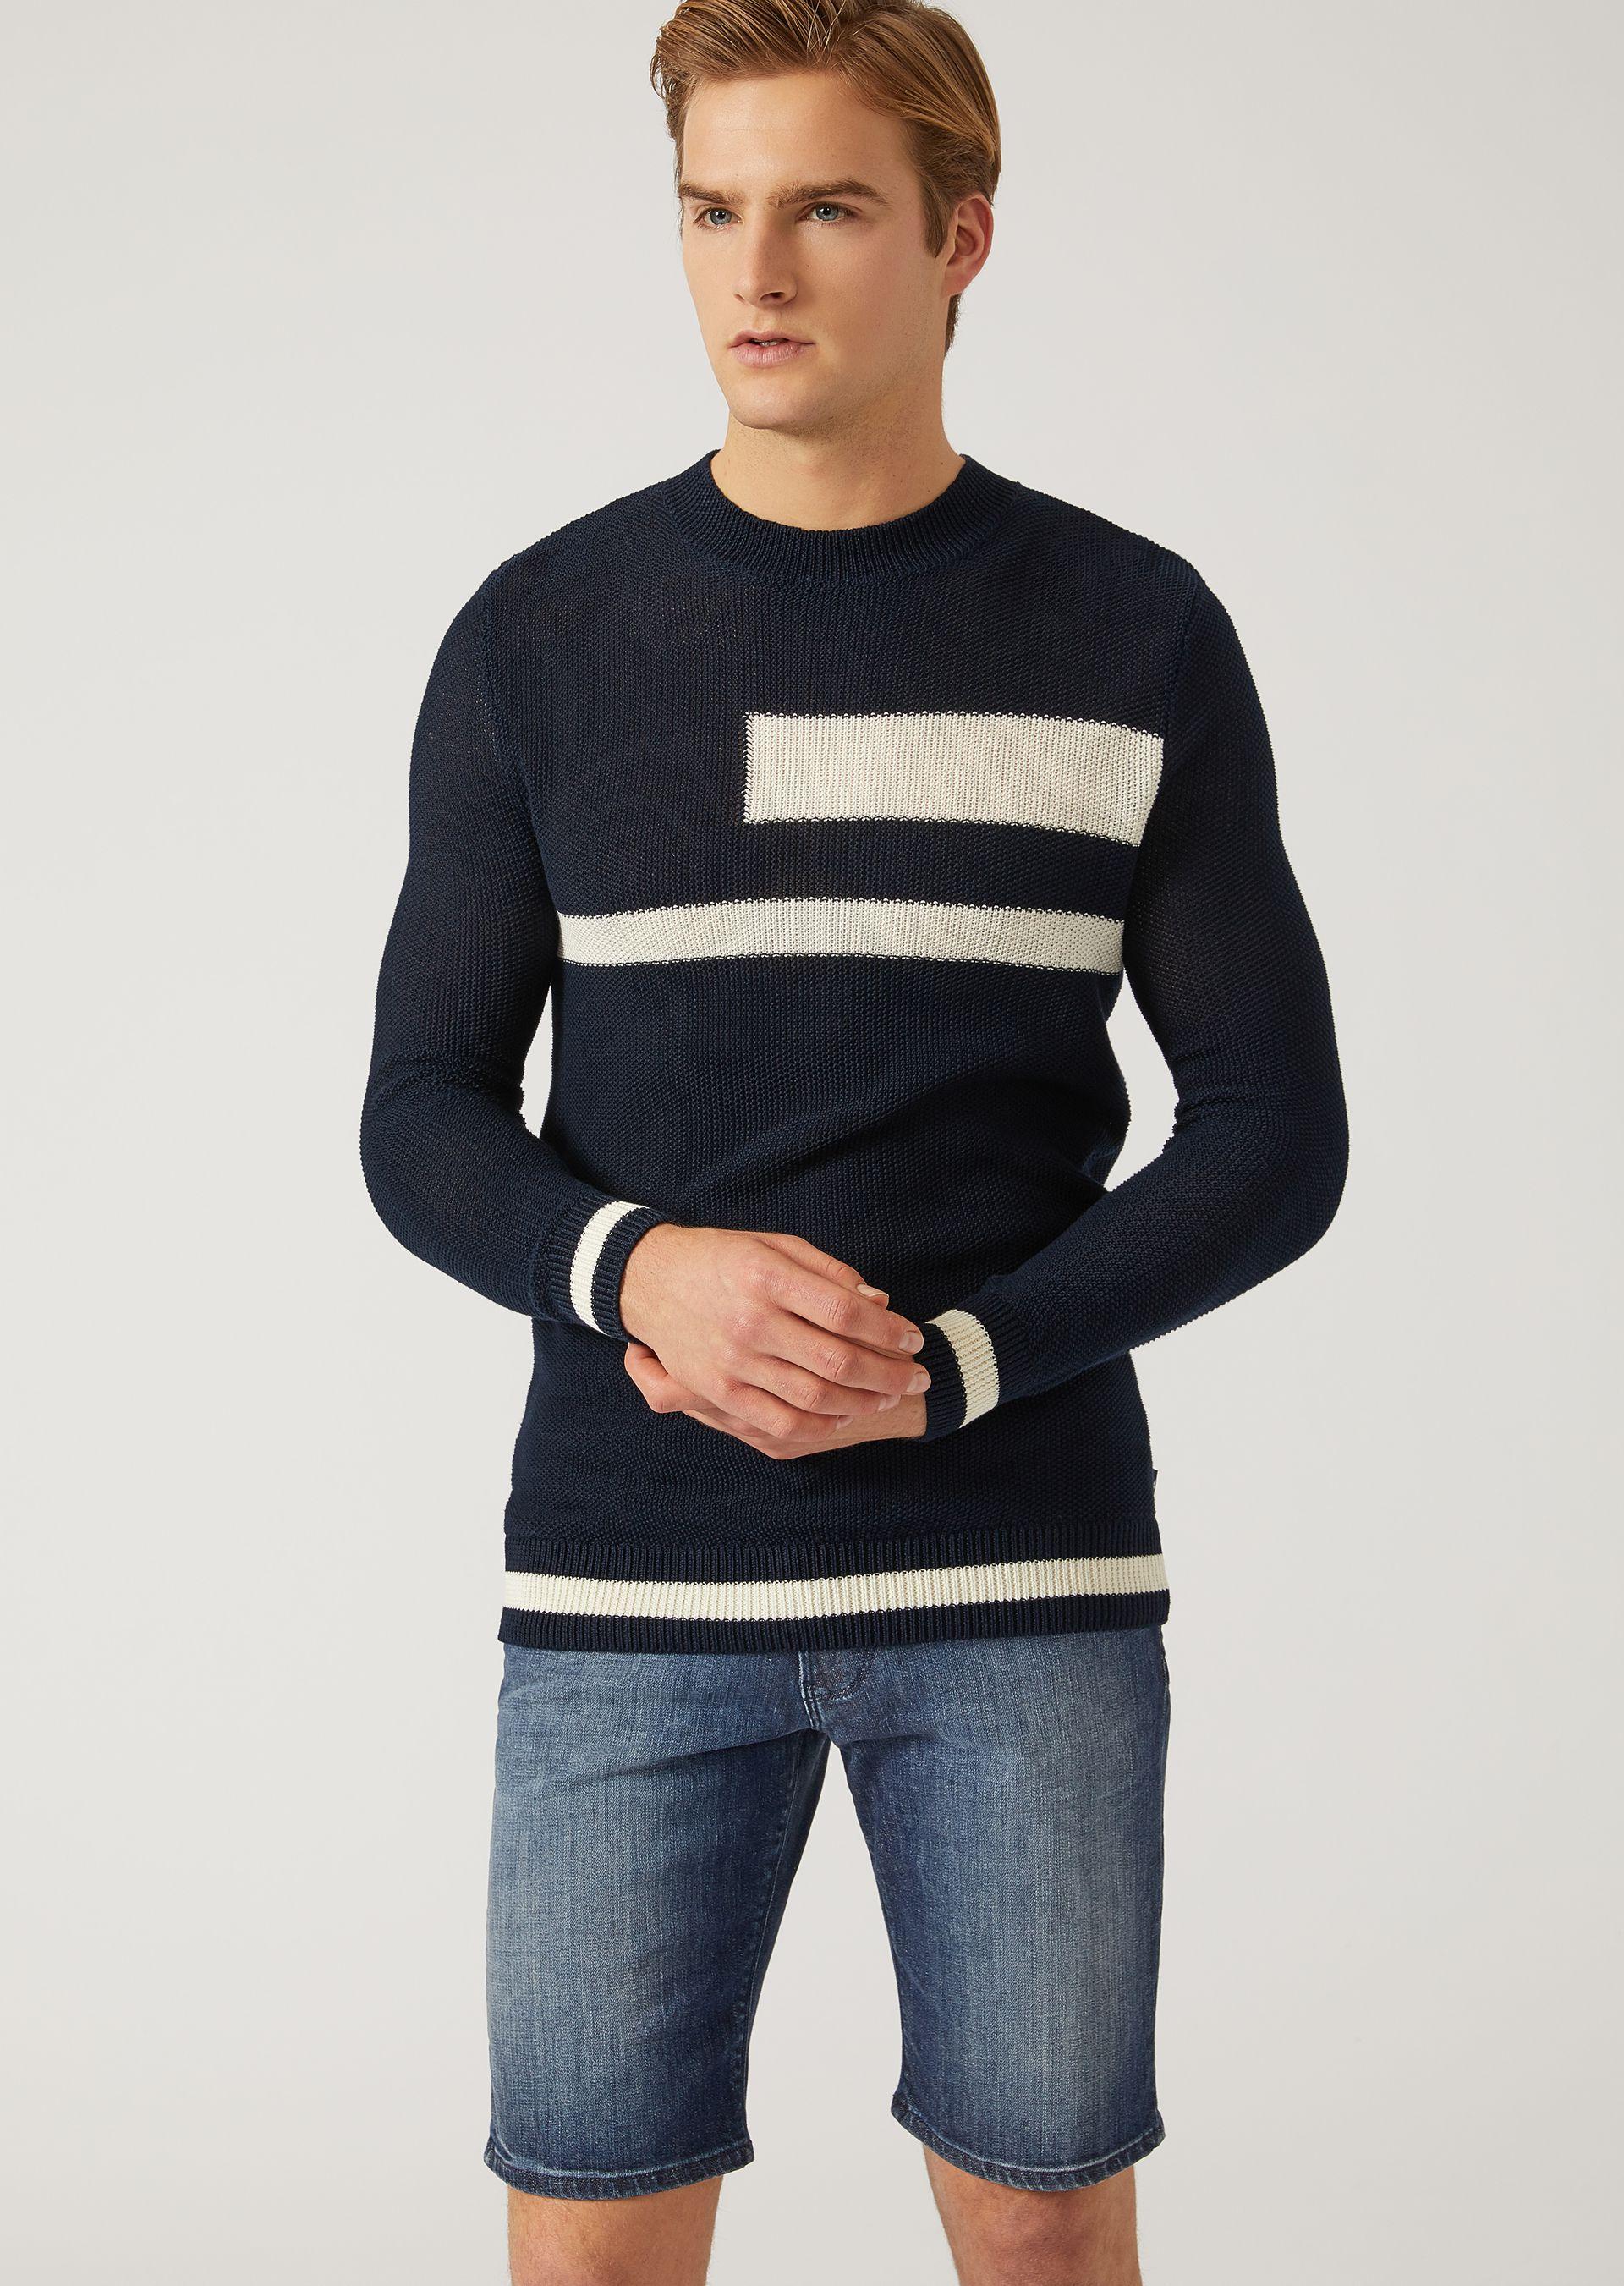 Emporio Armani Sweaters - Item 39857732 In Navy Blue | ModeSens